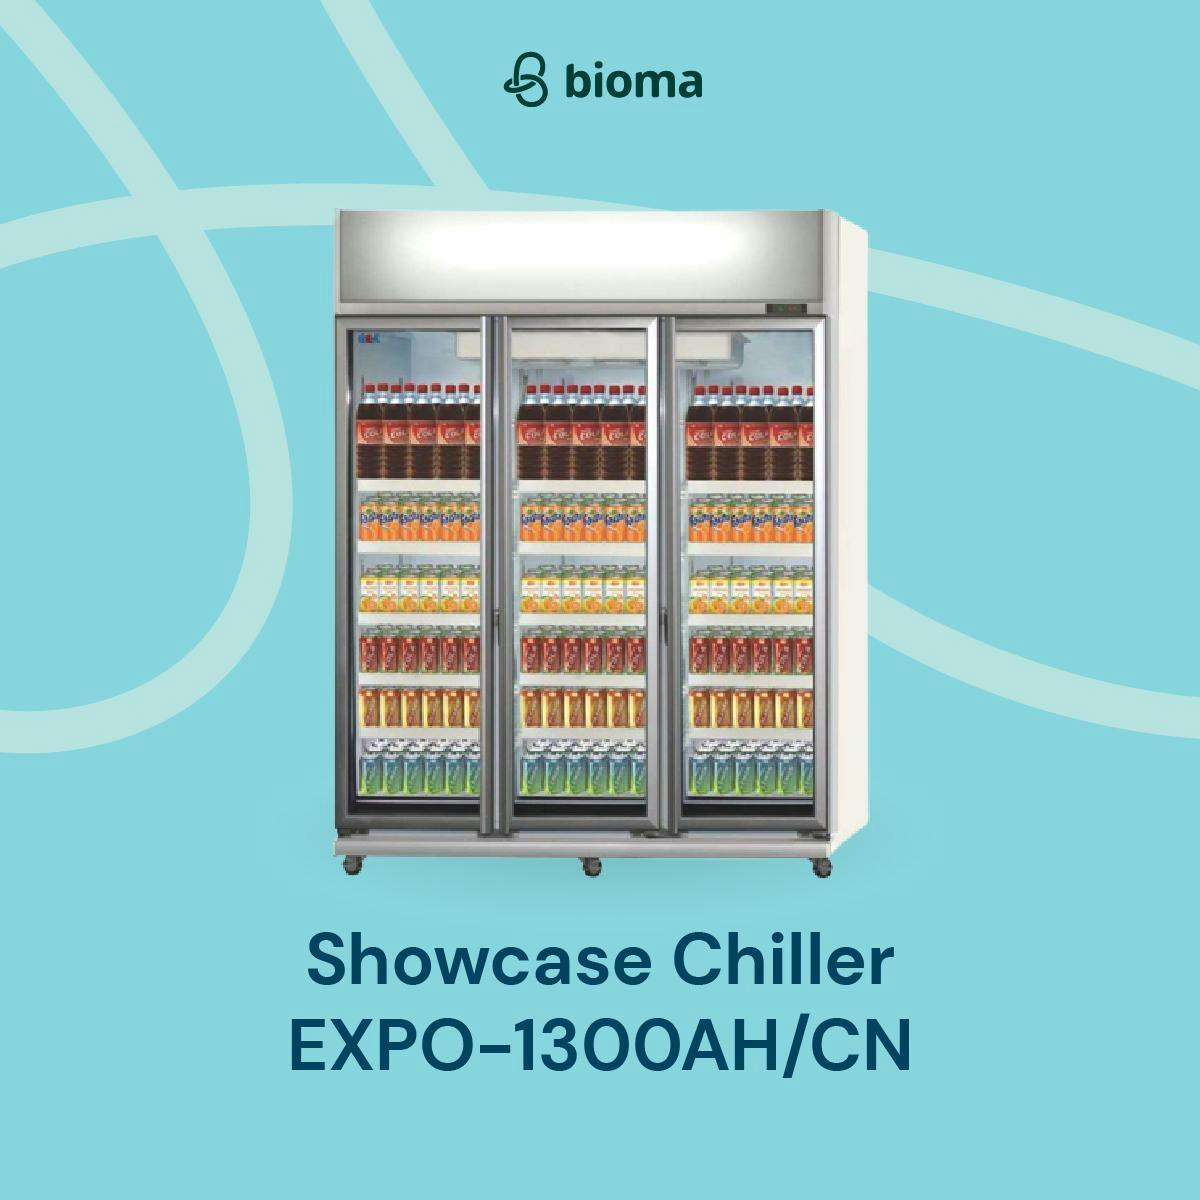 Showcase Chiller EXPO-1300AH/CN